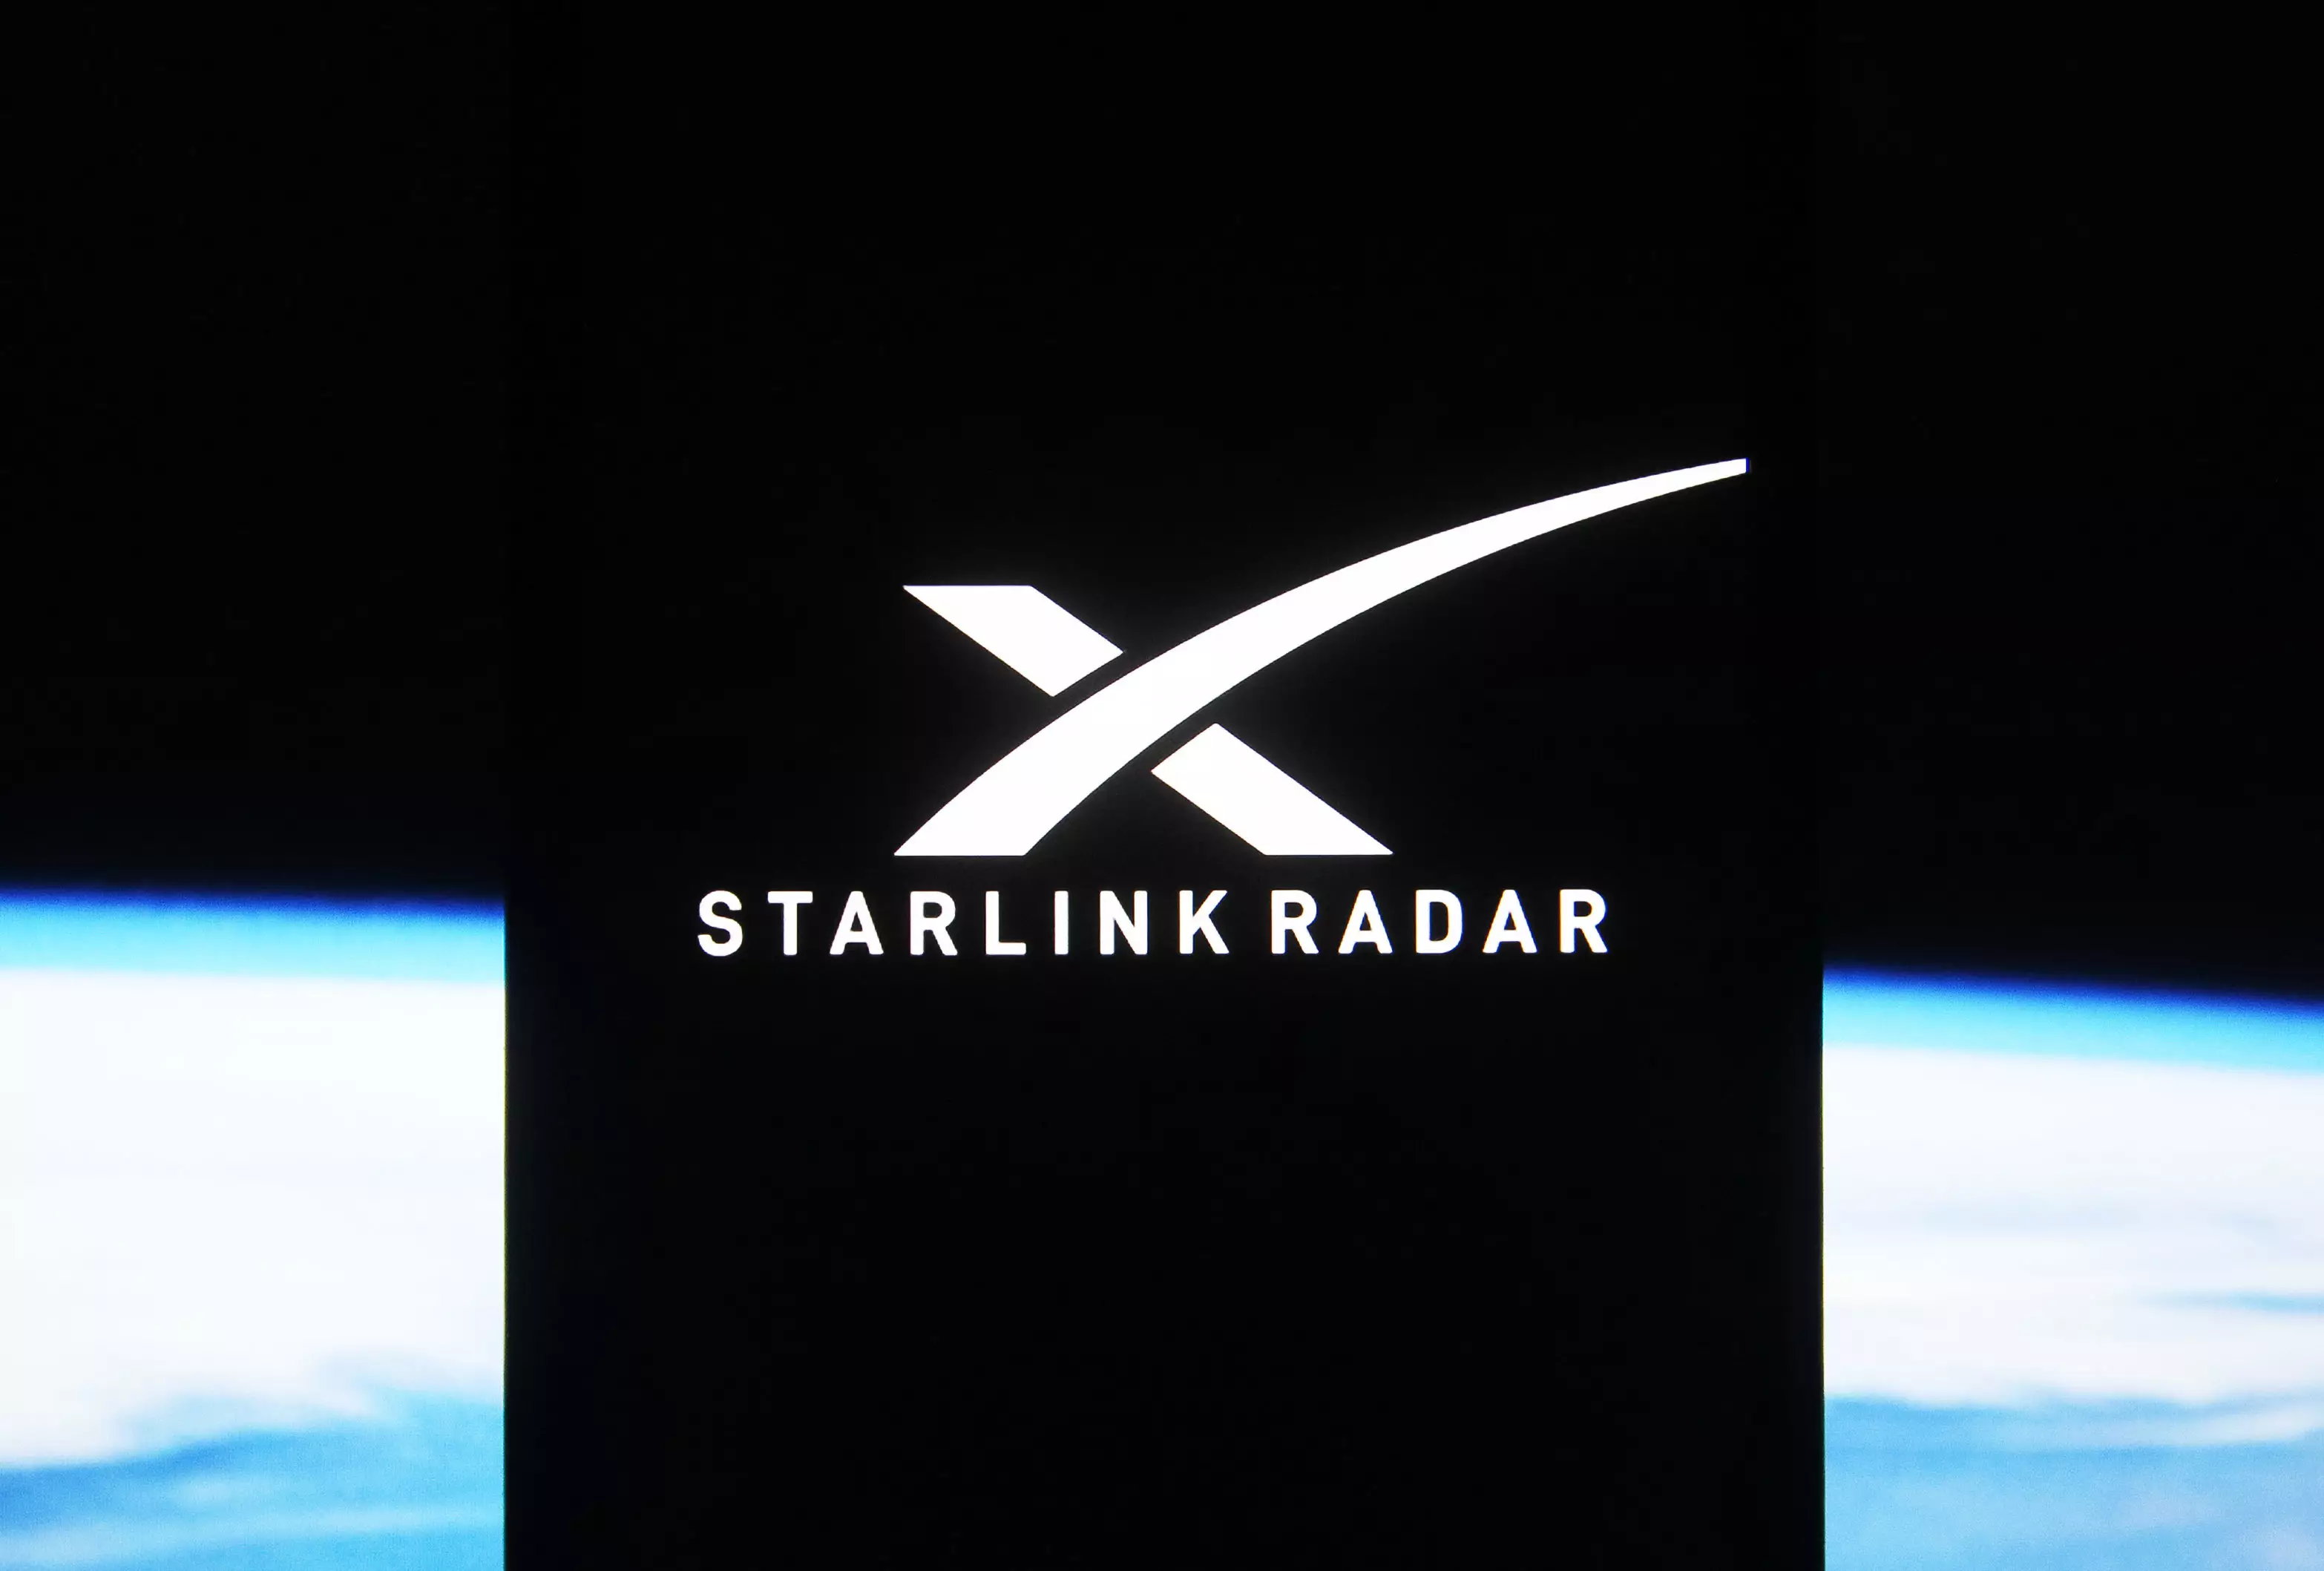 The Starlink Radar app.